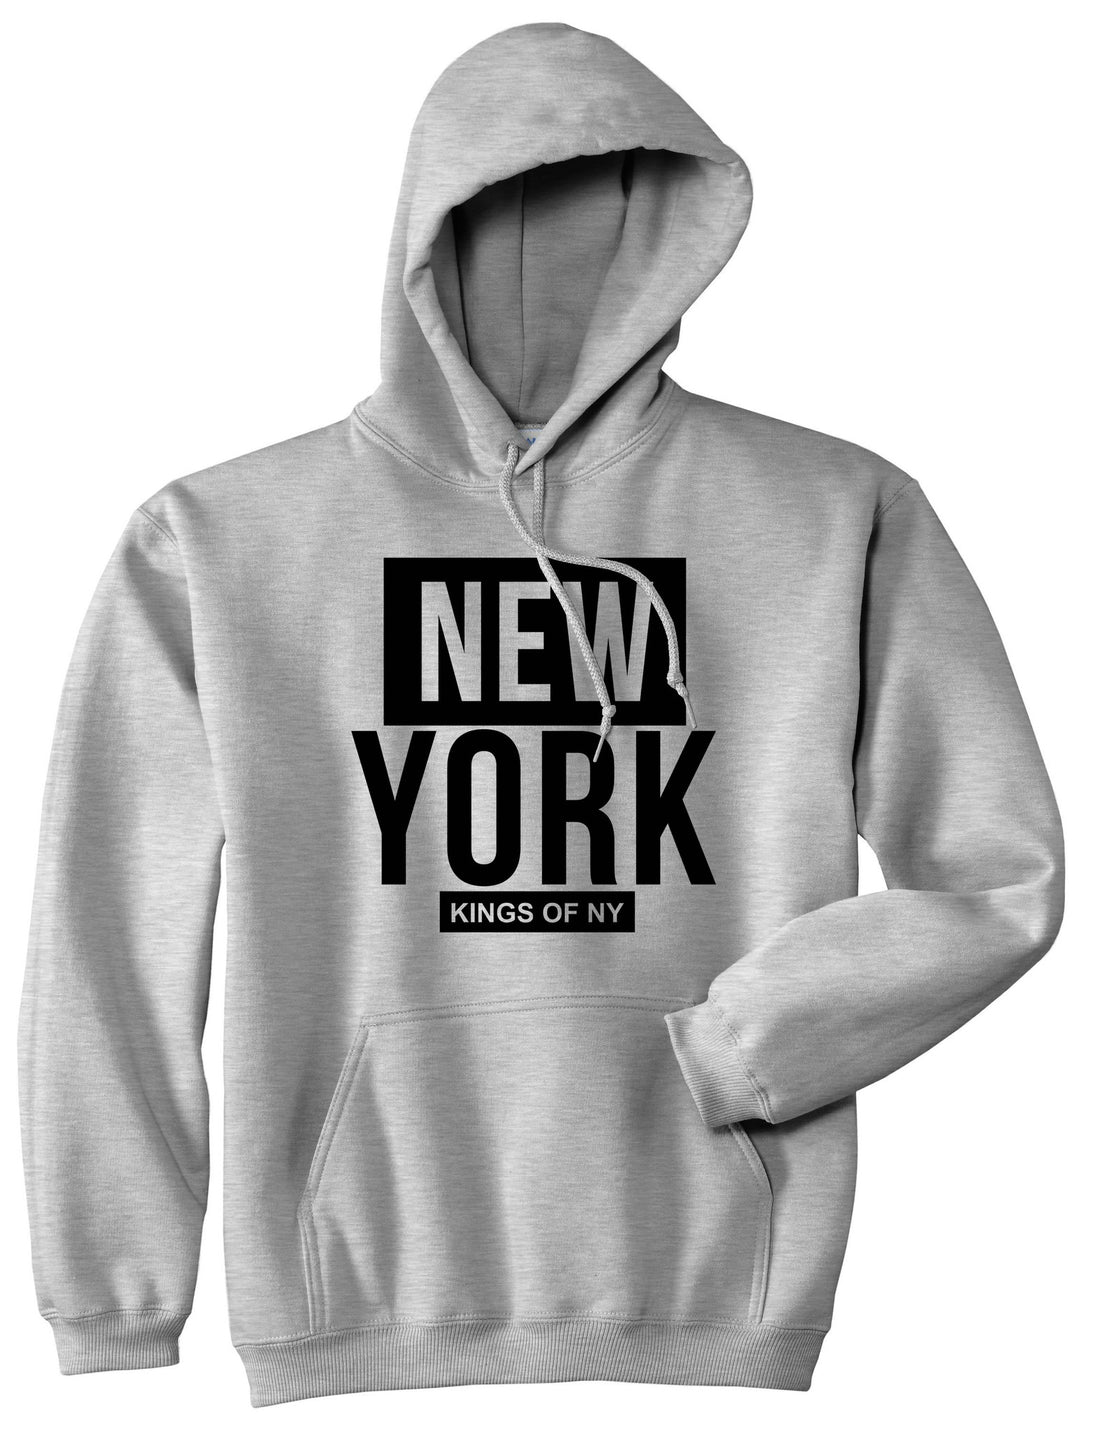 New York Block Box Pullover Hoodie Hoody in Grey by Kings Of NY